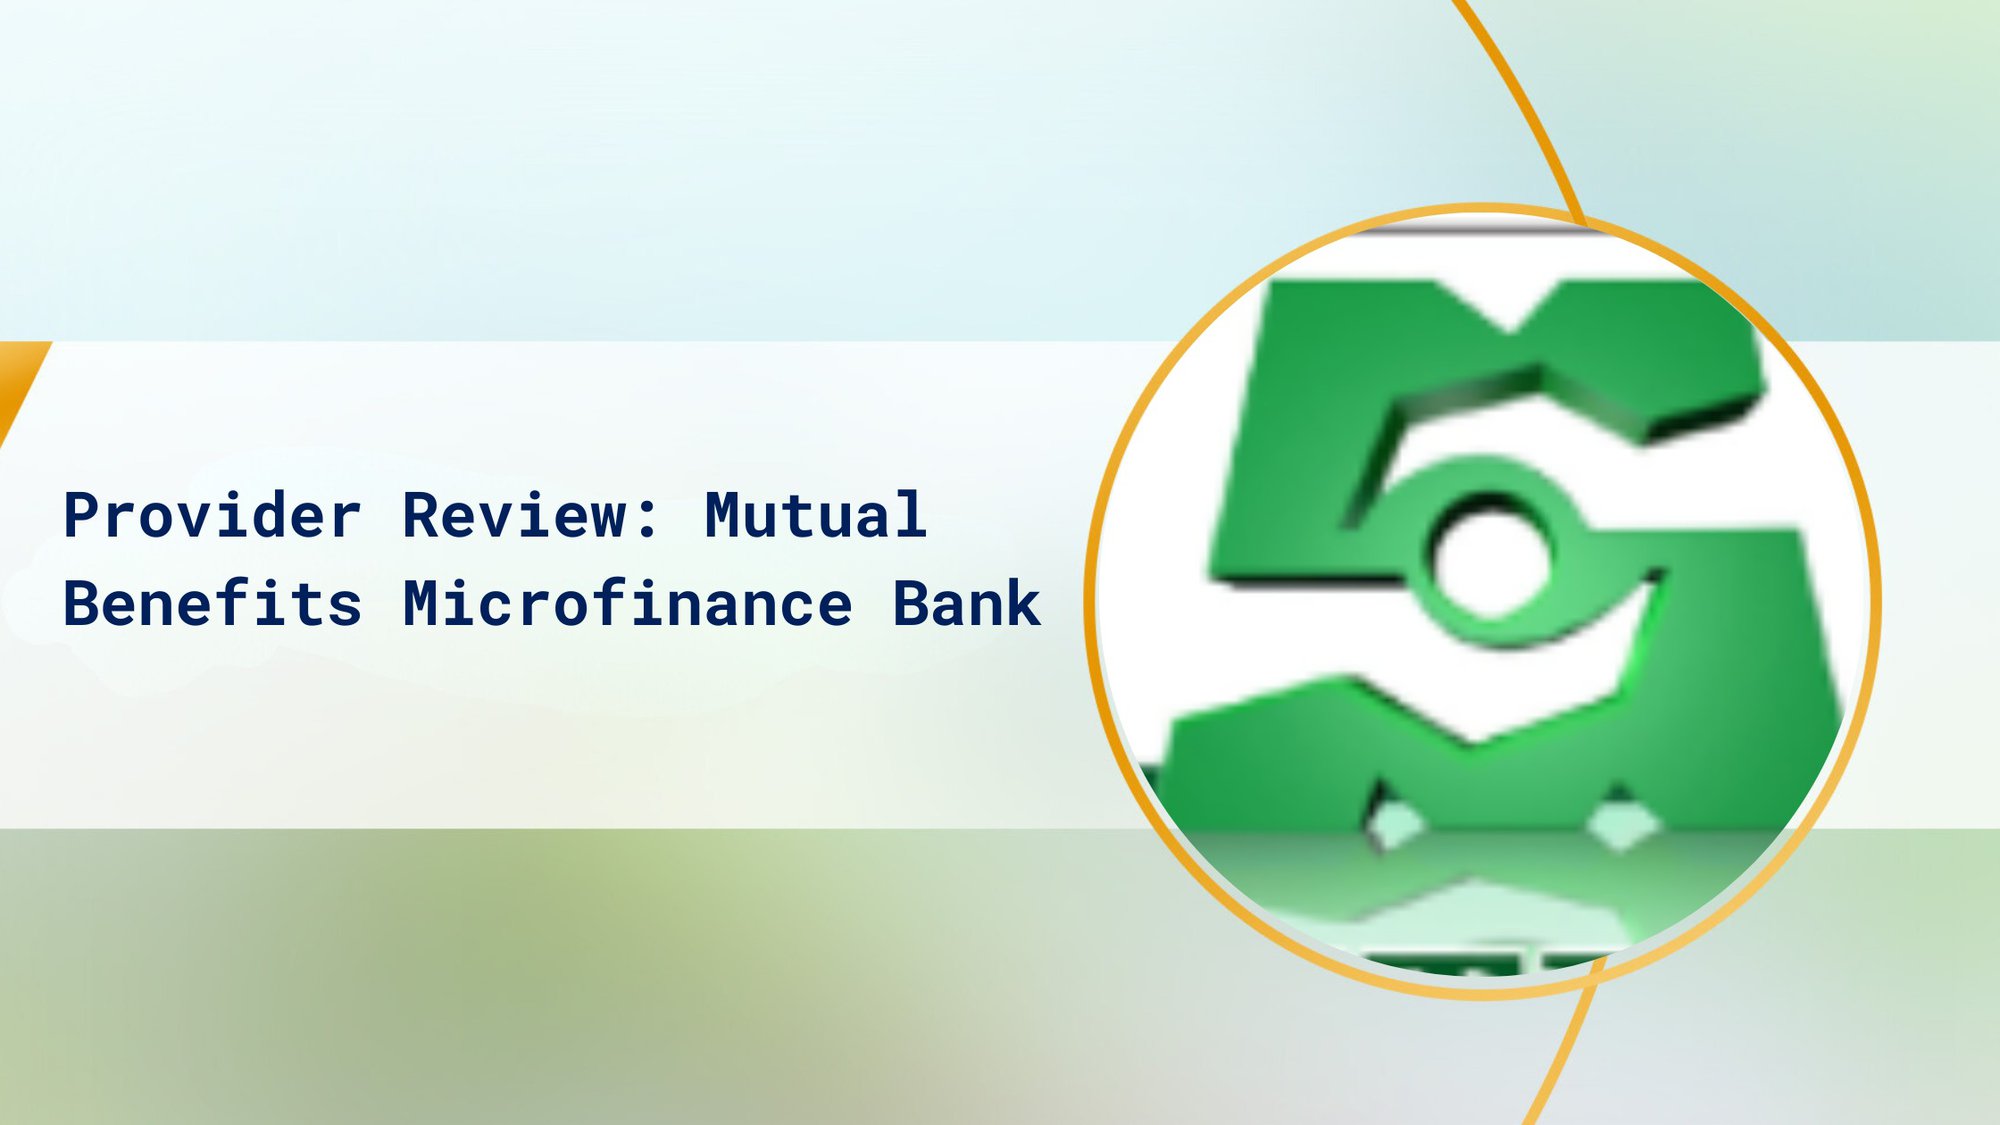 Provider Review: Mutual Benefits Microfinance Bank